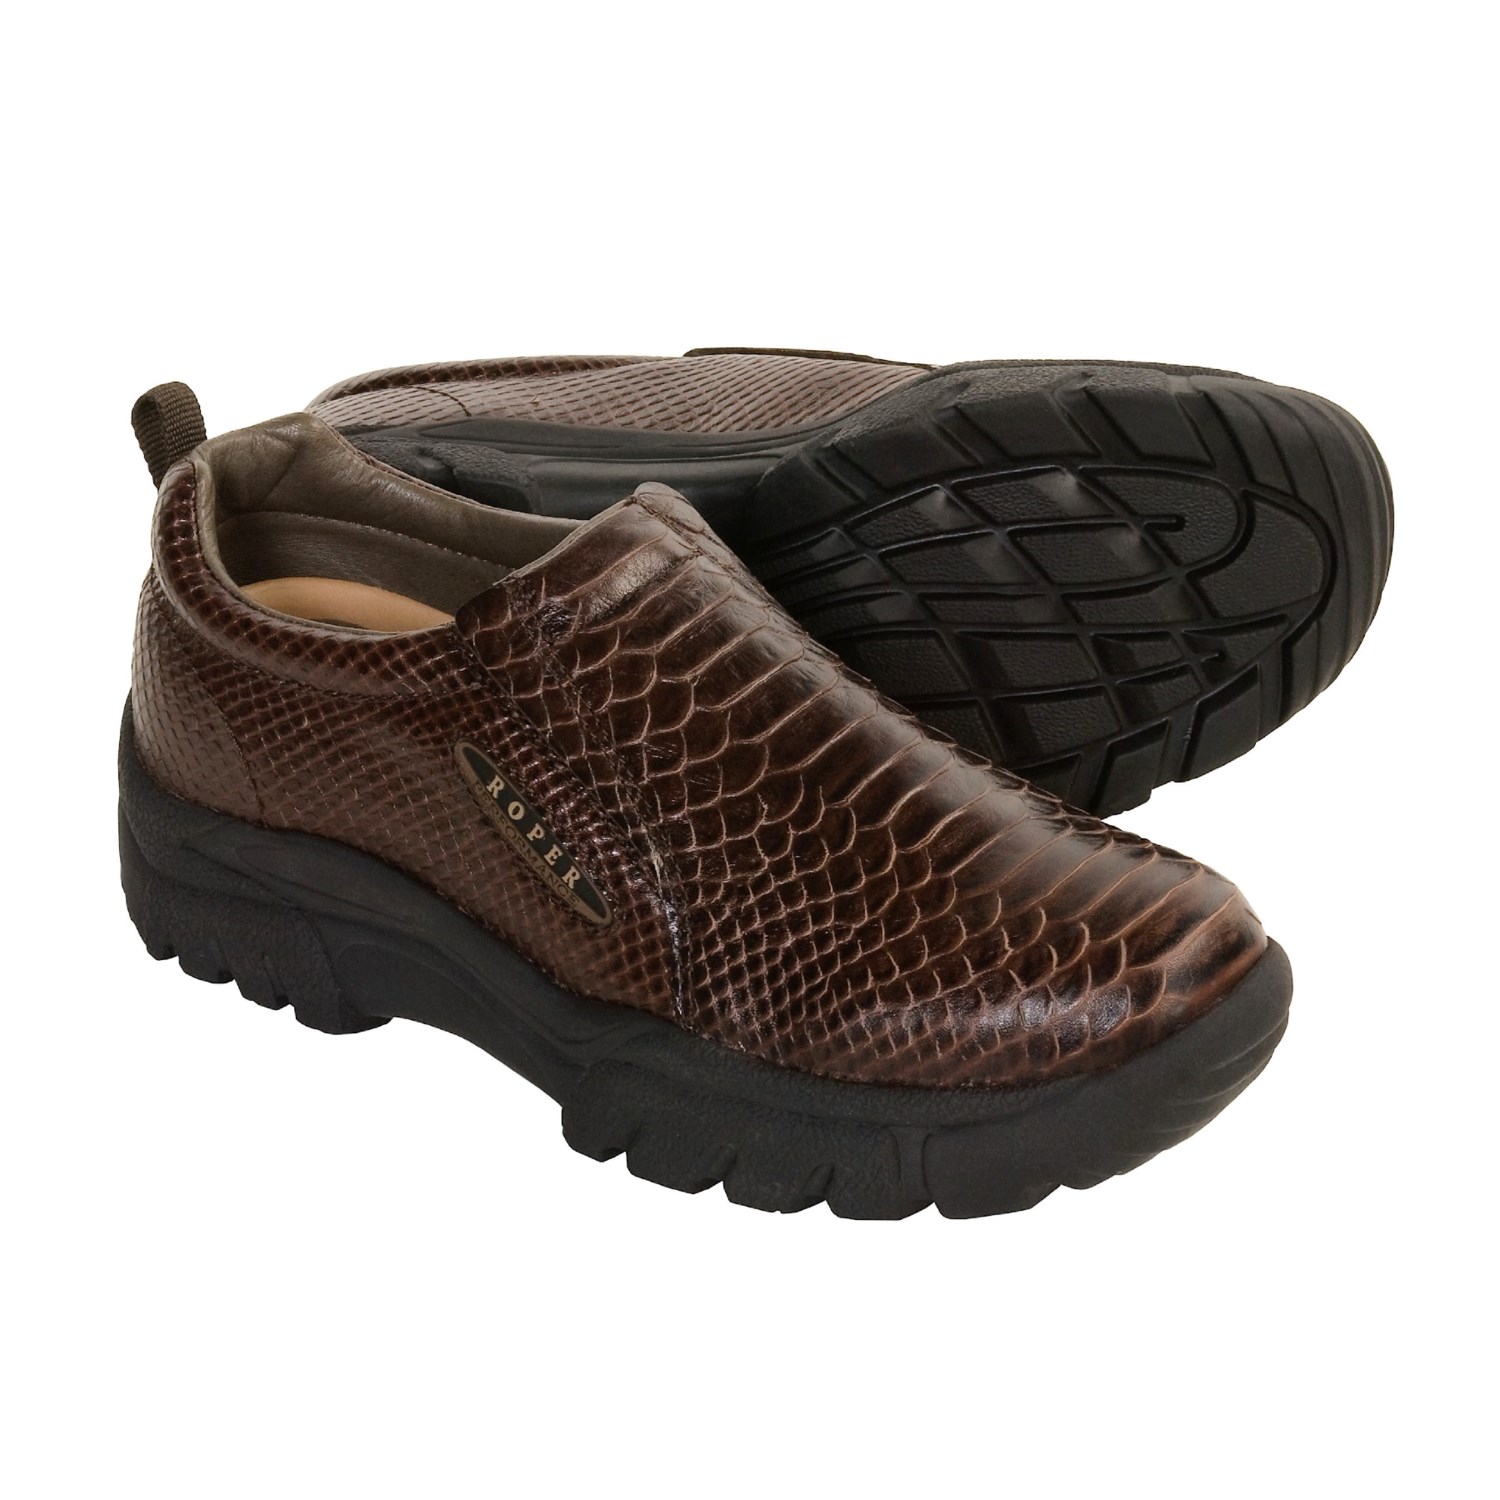 Roper Faux-Snake Belly Shoes (For Men) 2175G - Save 41%